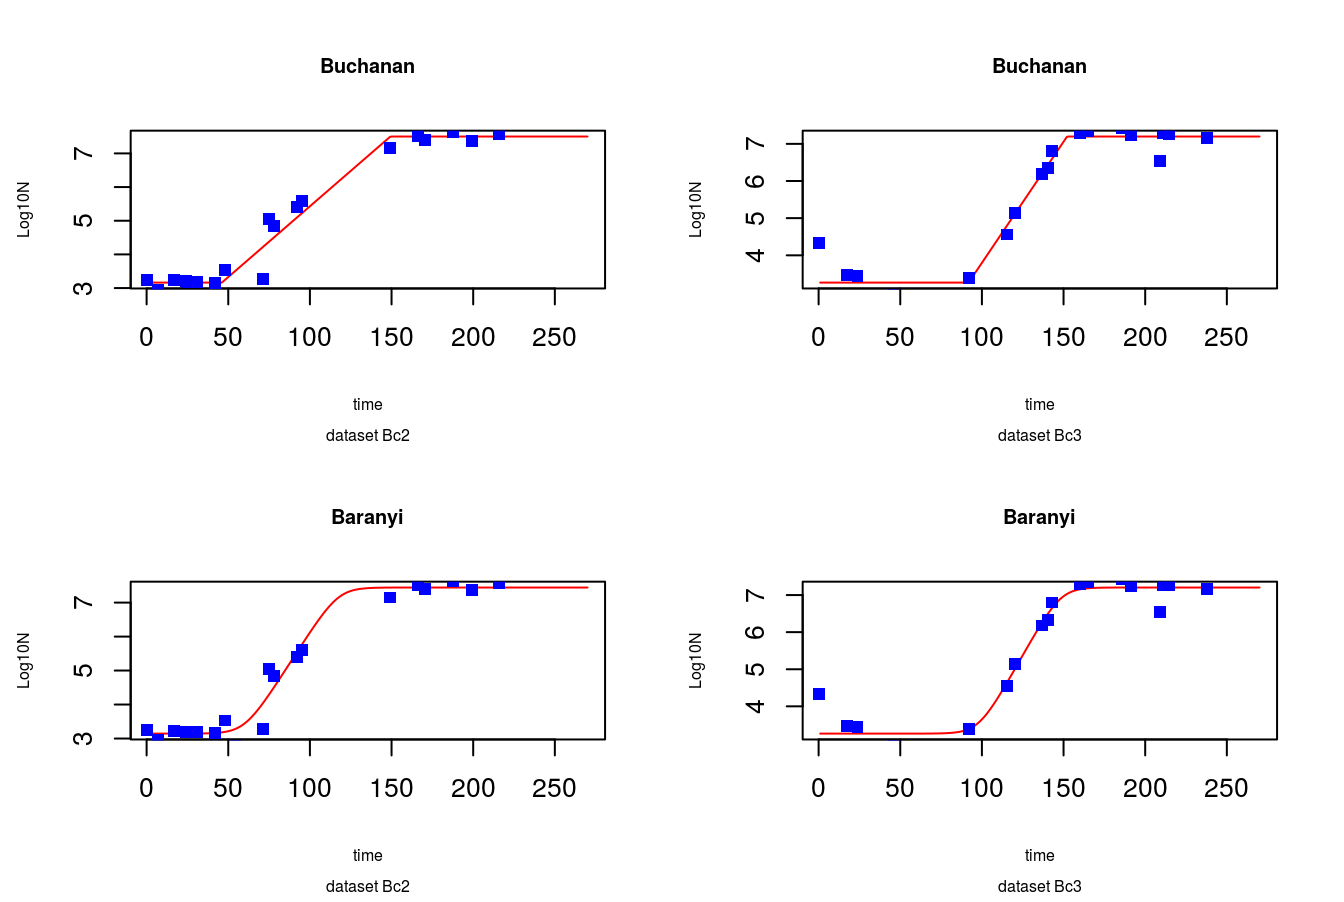 Predicted values vs. data points